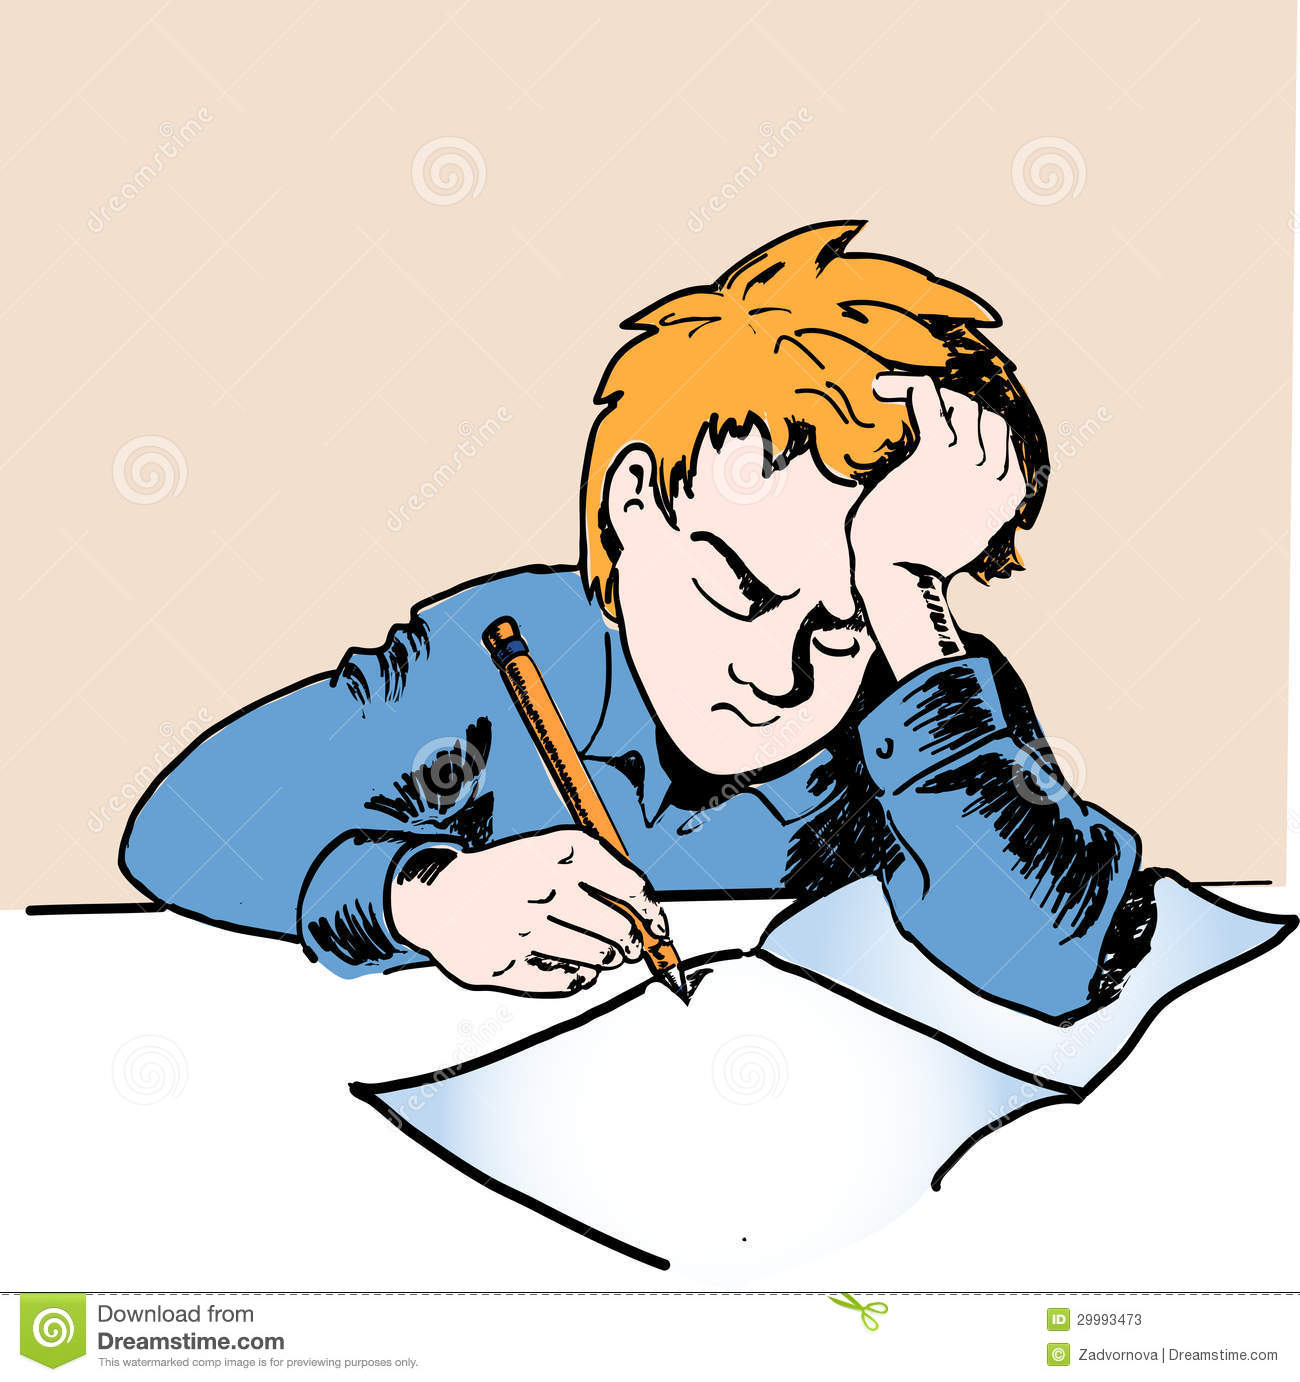 Sad Schoolboy Doing Homework Stock Photos   Image  29993473